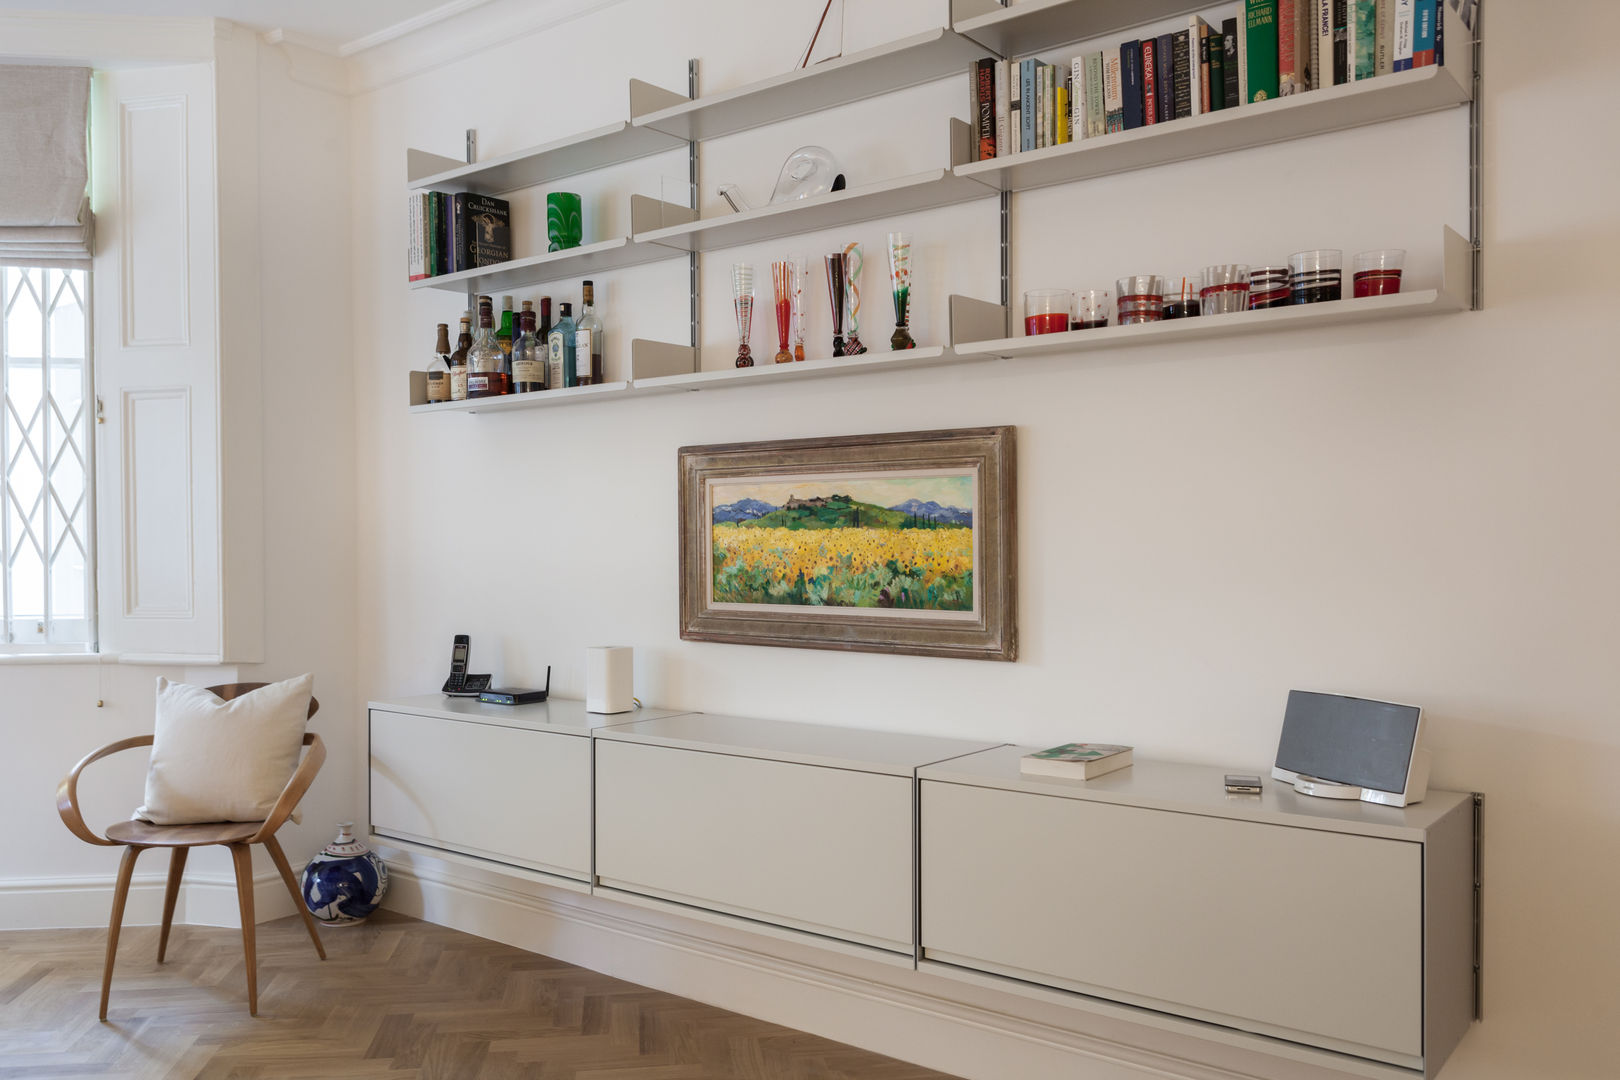 Vitsoe shelving unit in London apartment homify Livings modernos: Ideas, imágenes y decoración Metal vitsoe,shelvingunit,cupboard,herringbone,woodfloor